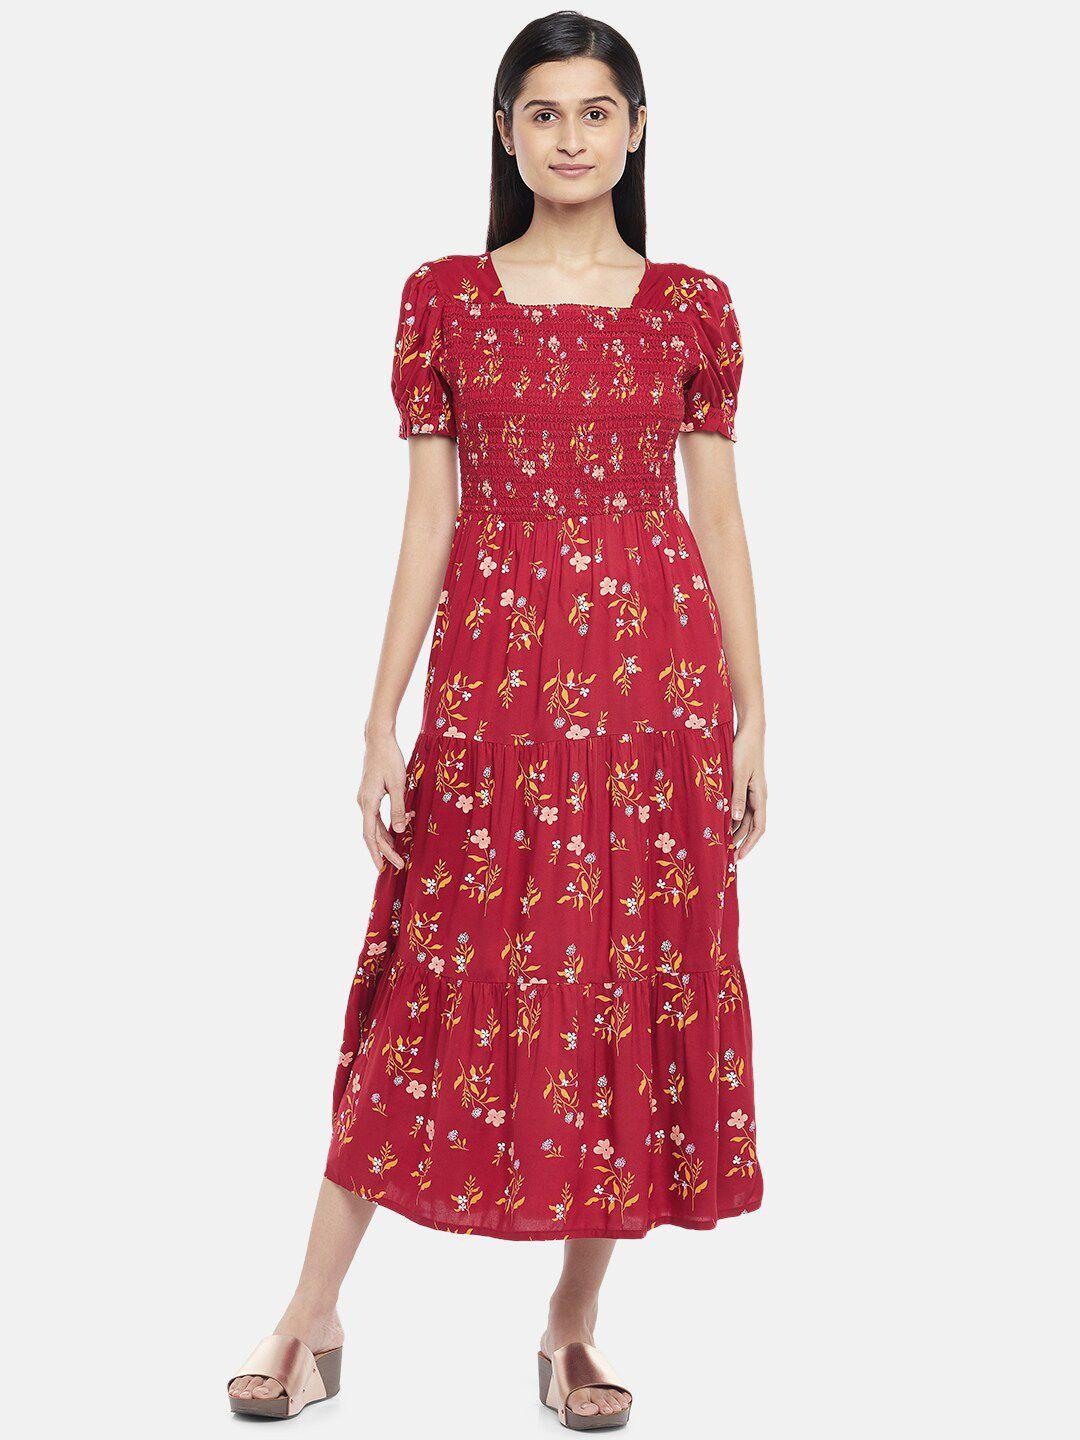 honey by pantaloons red floral printed midi dress